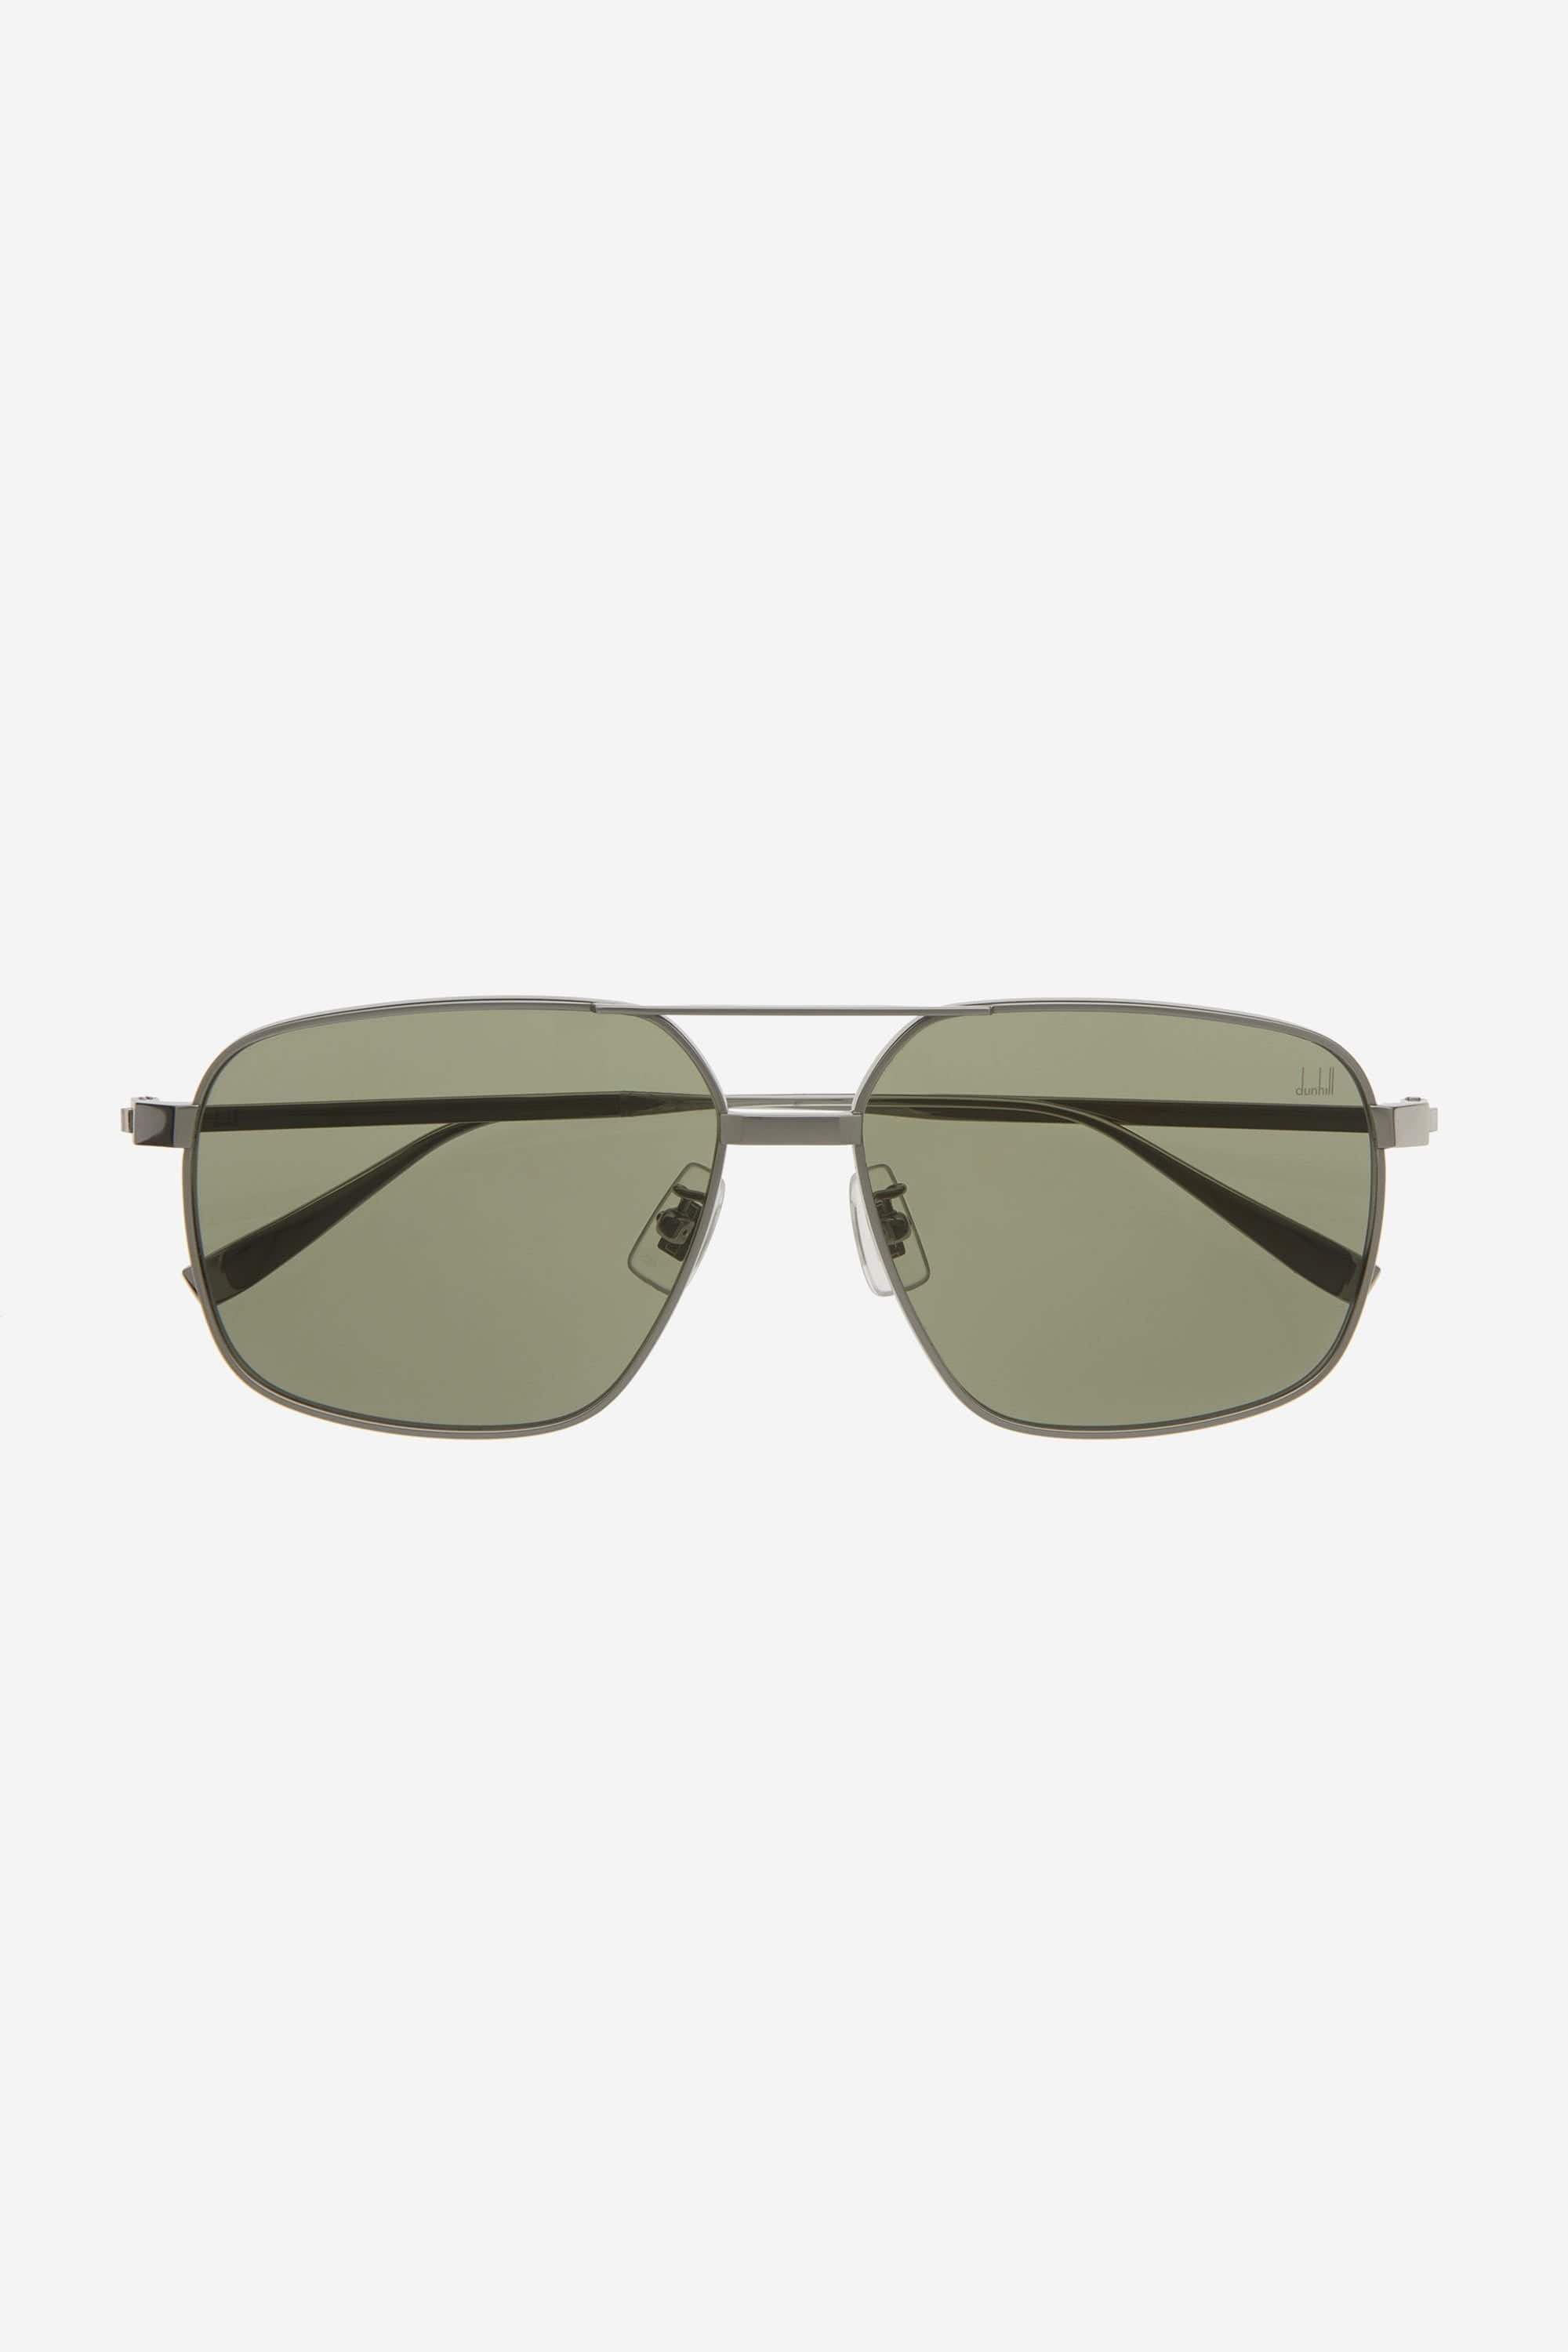 Dunhill Caravan Silver Green Sunglasses In Titanium | lupon.gov.ph